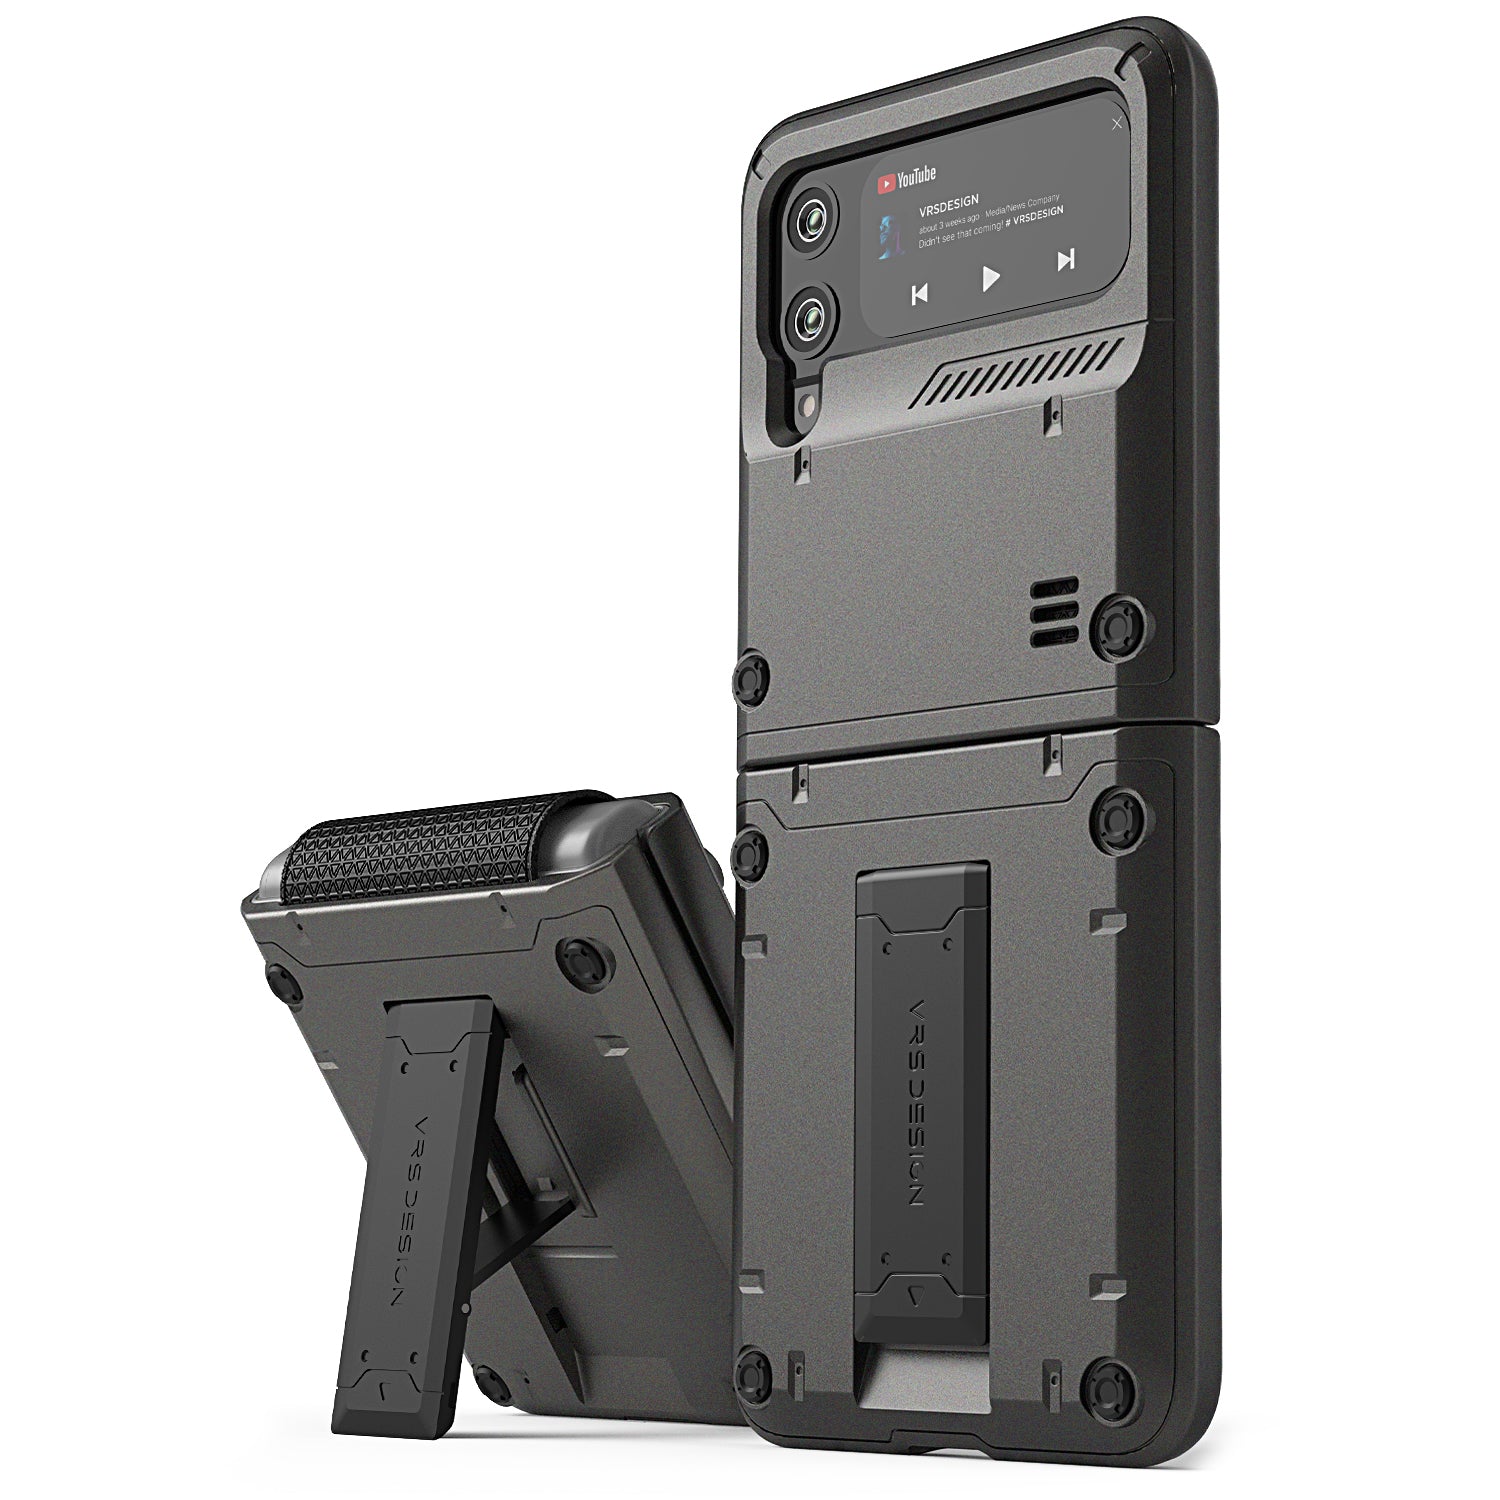 VRS Design Galaxy Z Flip 3 Case Terra Guard Active - Metal Black